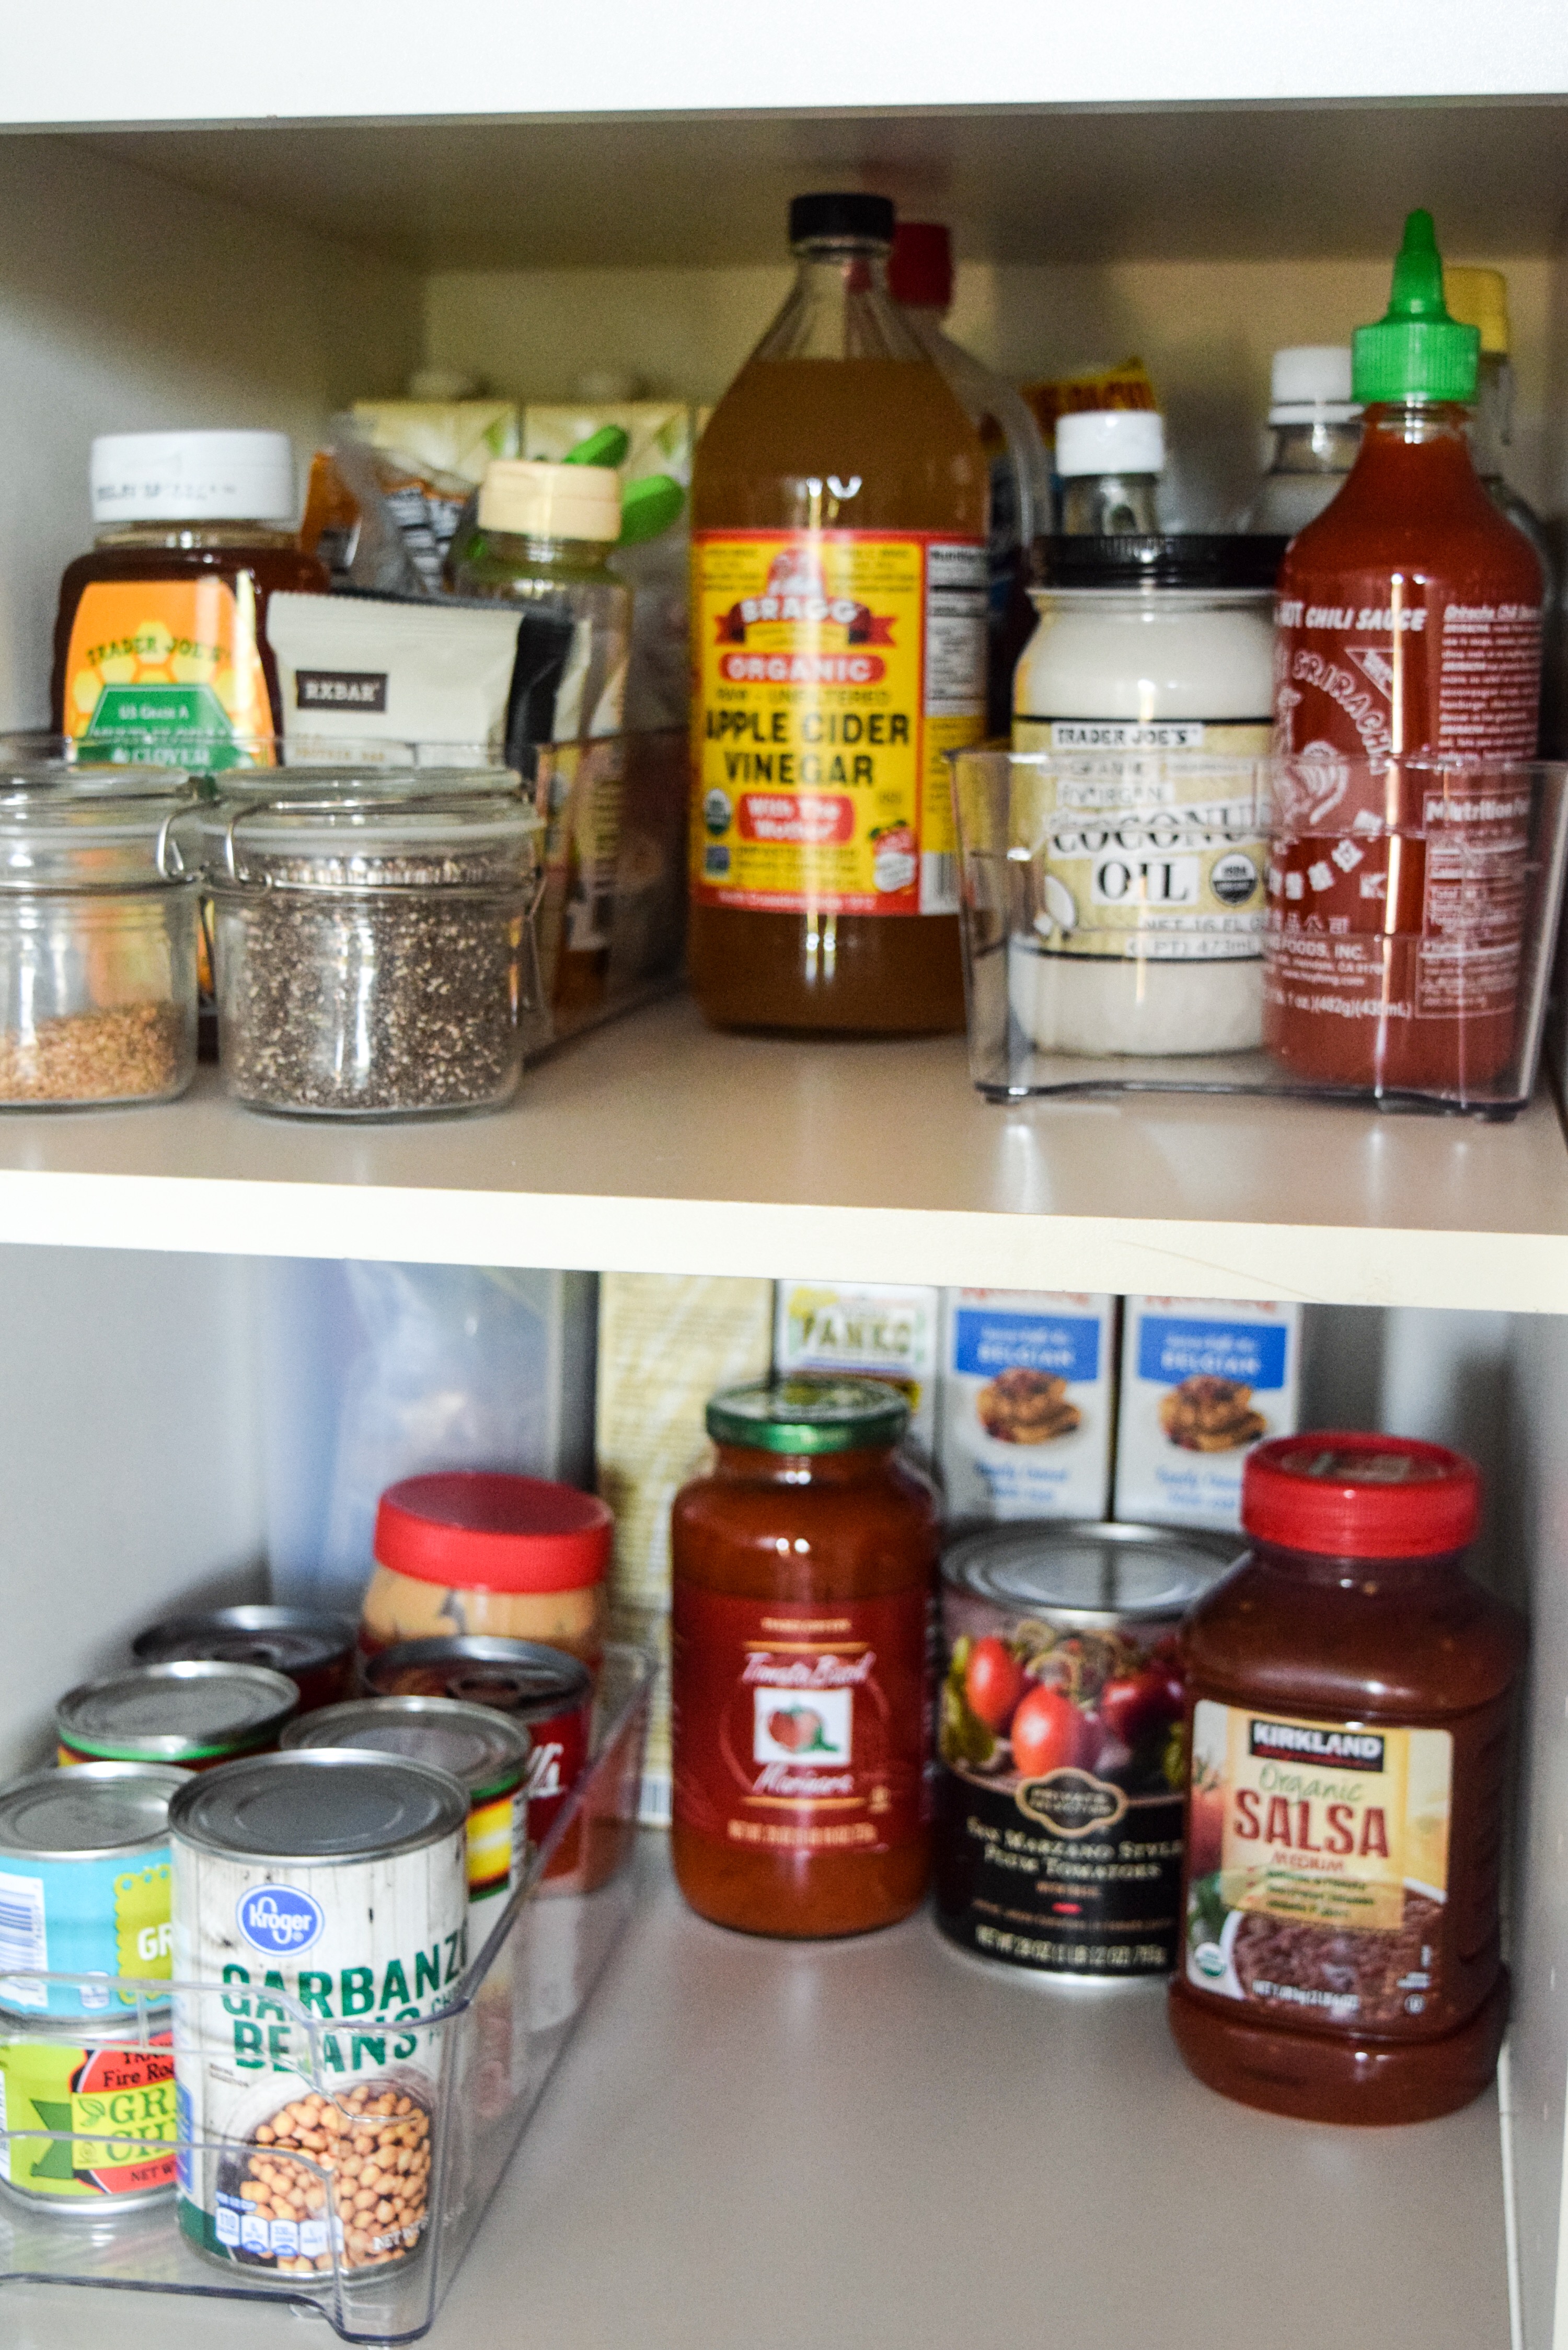 How to organize deep pantry shelves: 10 ways to organize pantry